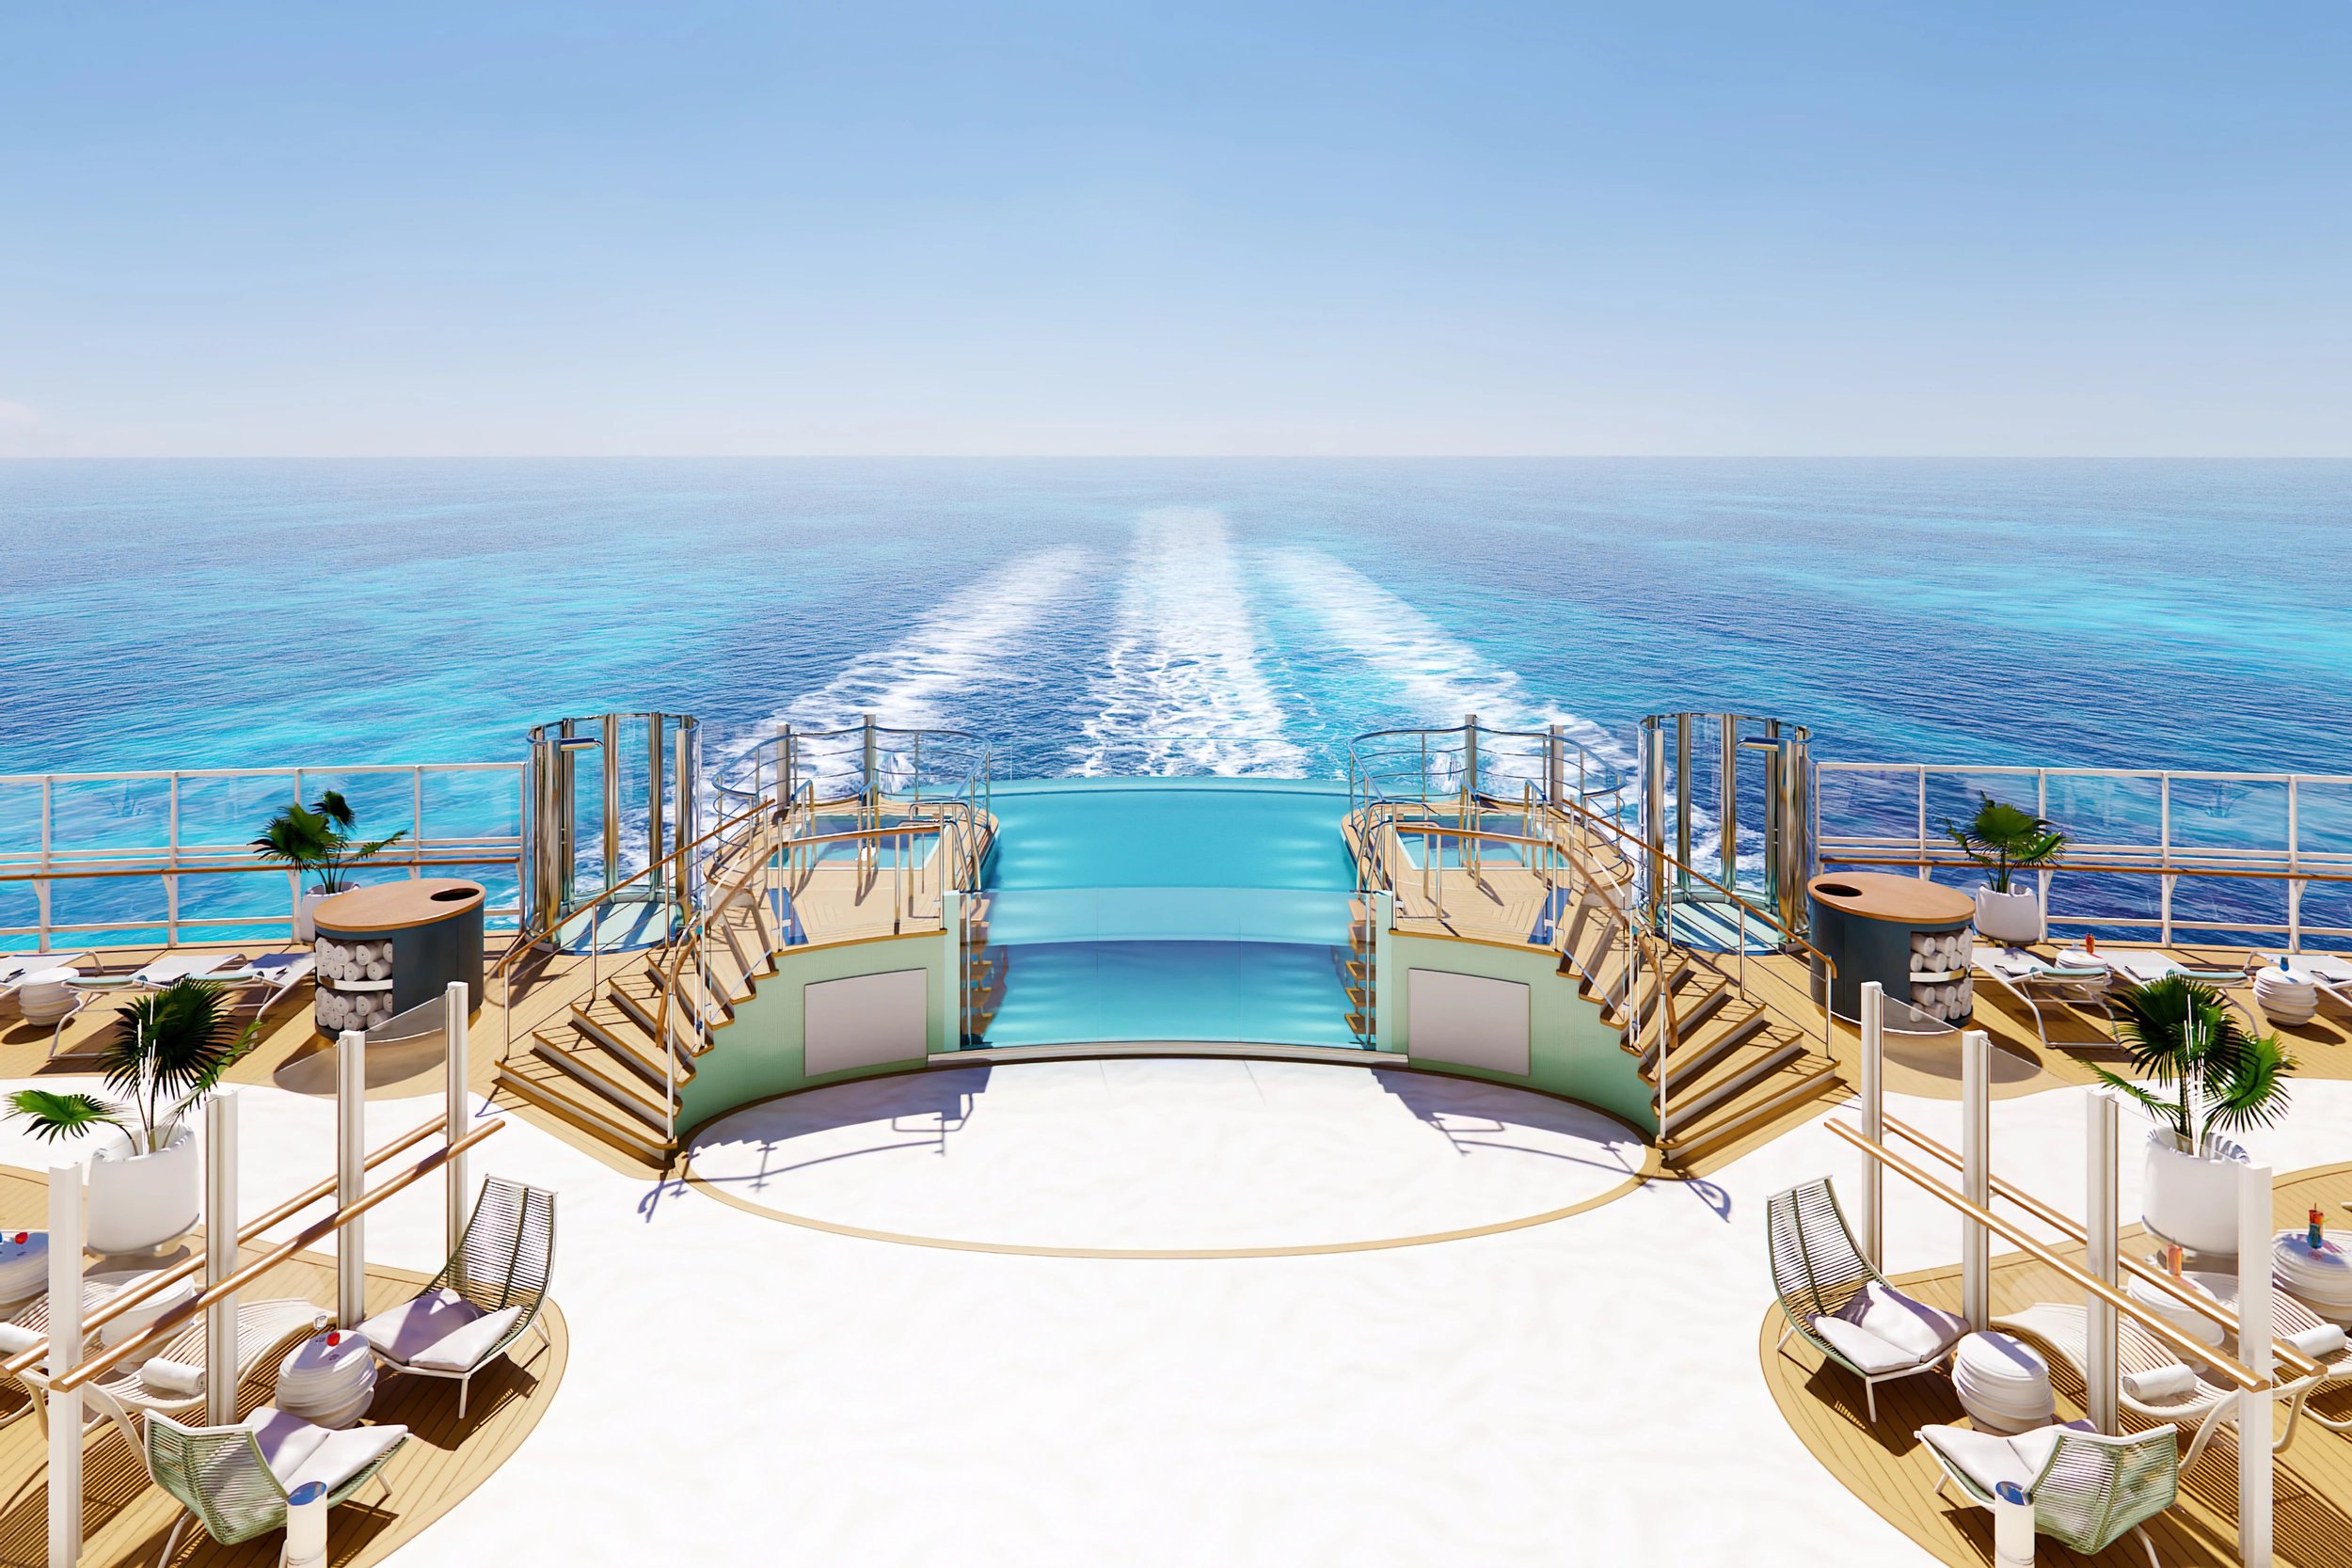 Wake View Terrace on Sun Princess - Images: Princess Cruises